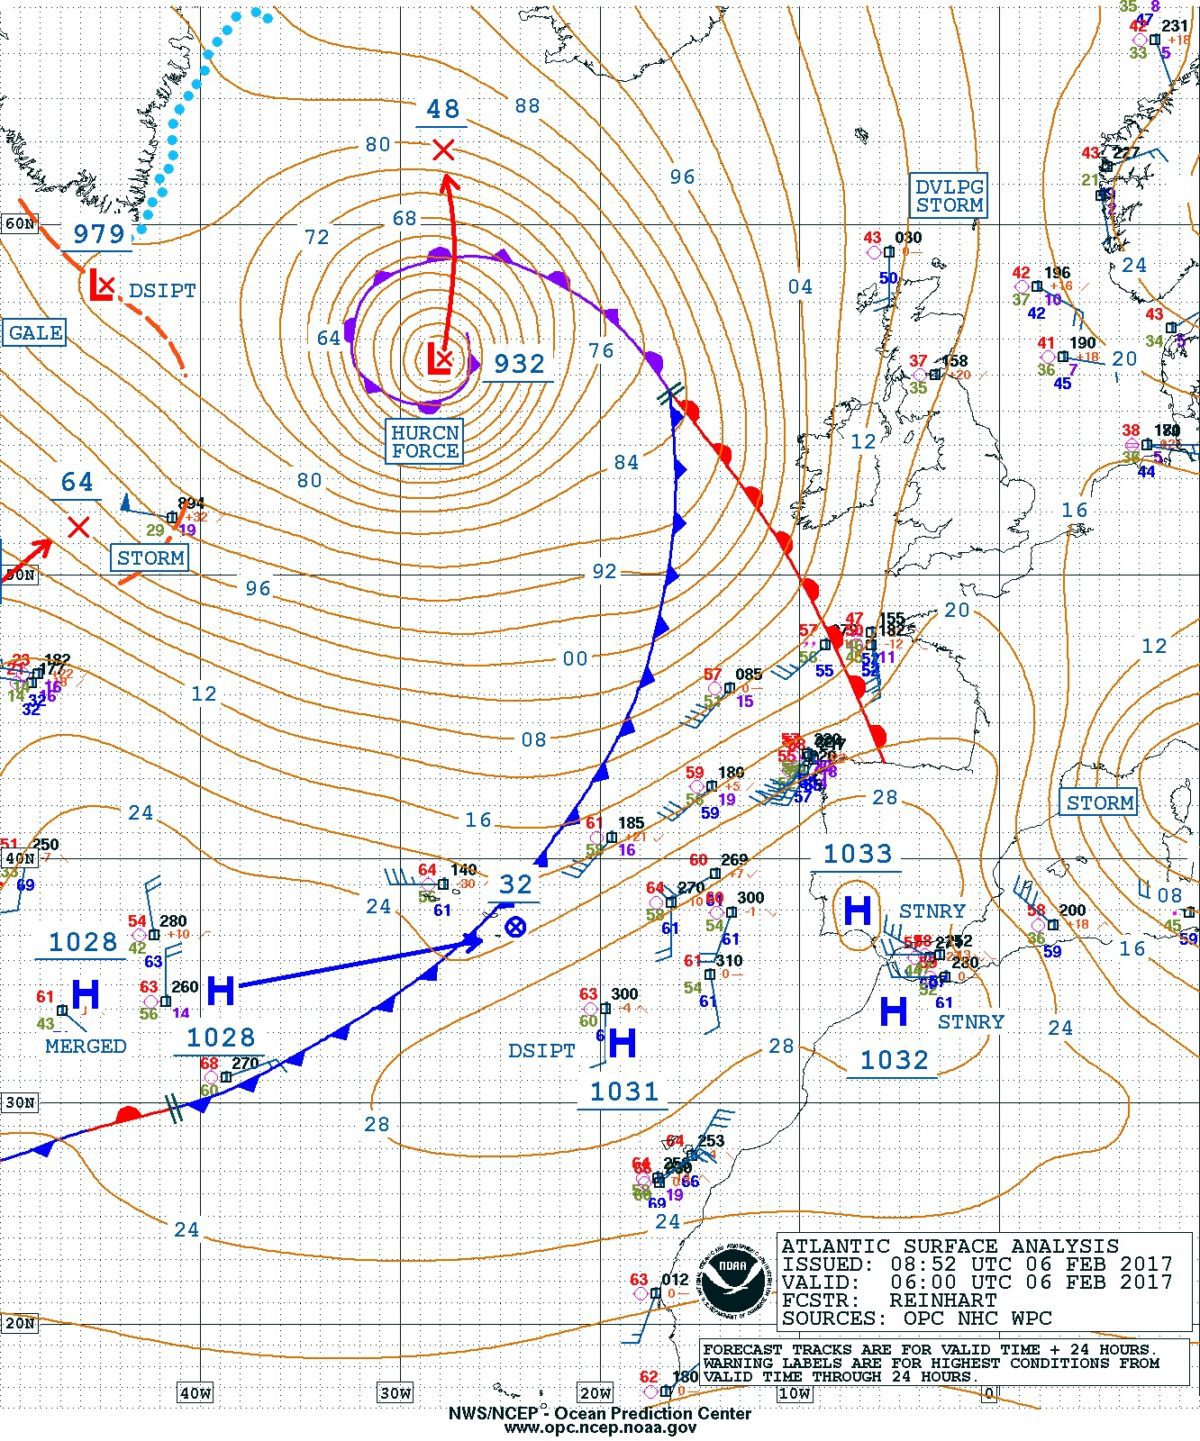 Severe Weather Alert: 932 MB Hurricane Force Storm Over Eastern North Atlantic